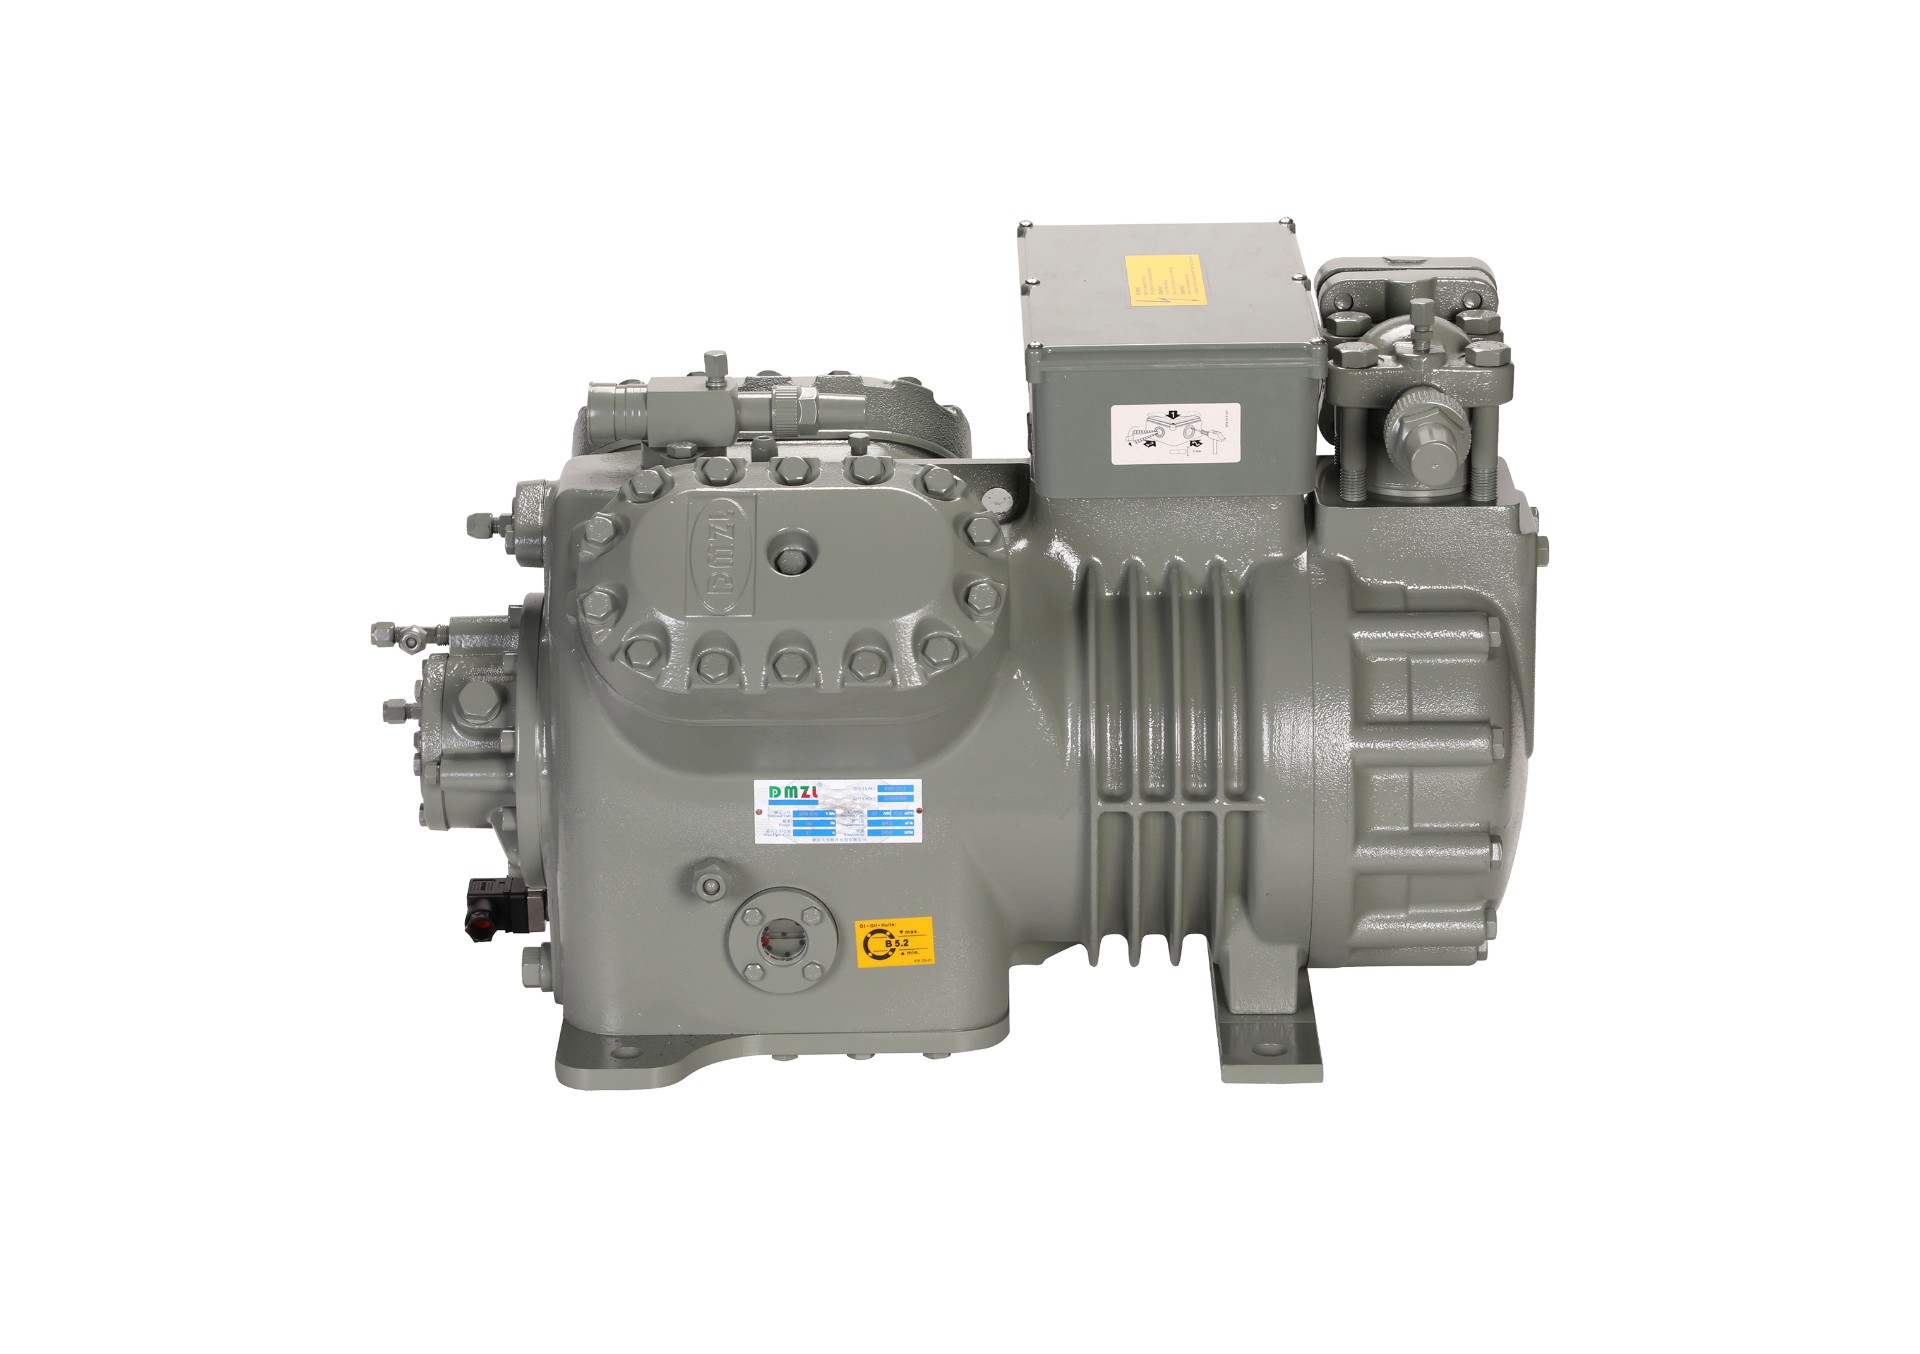 4VD-15.2---4VG-30.2 DMZL piston refrigeration compressor